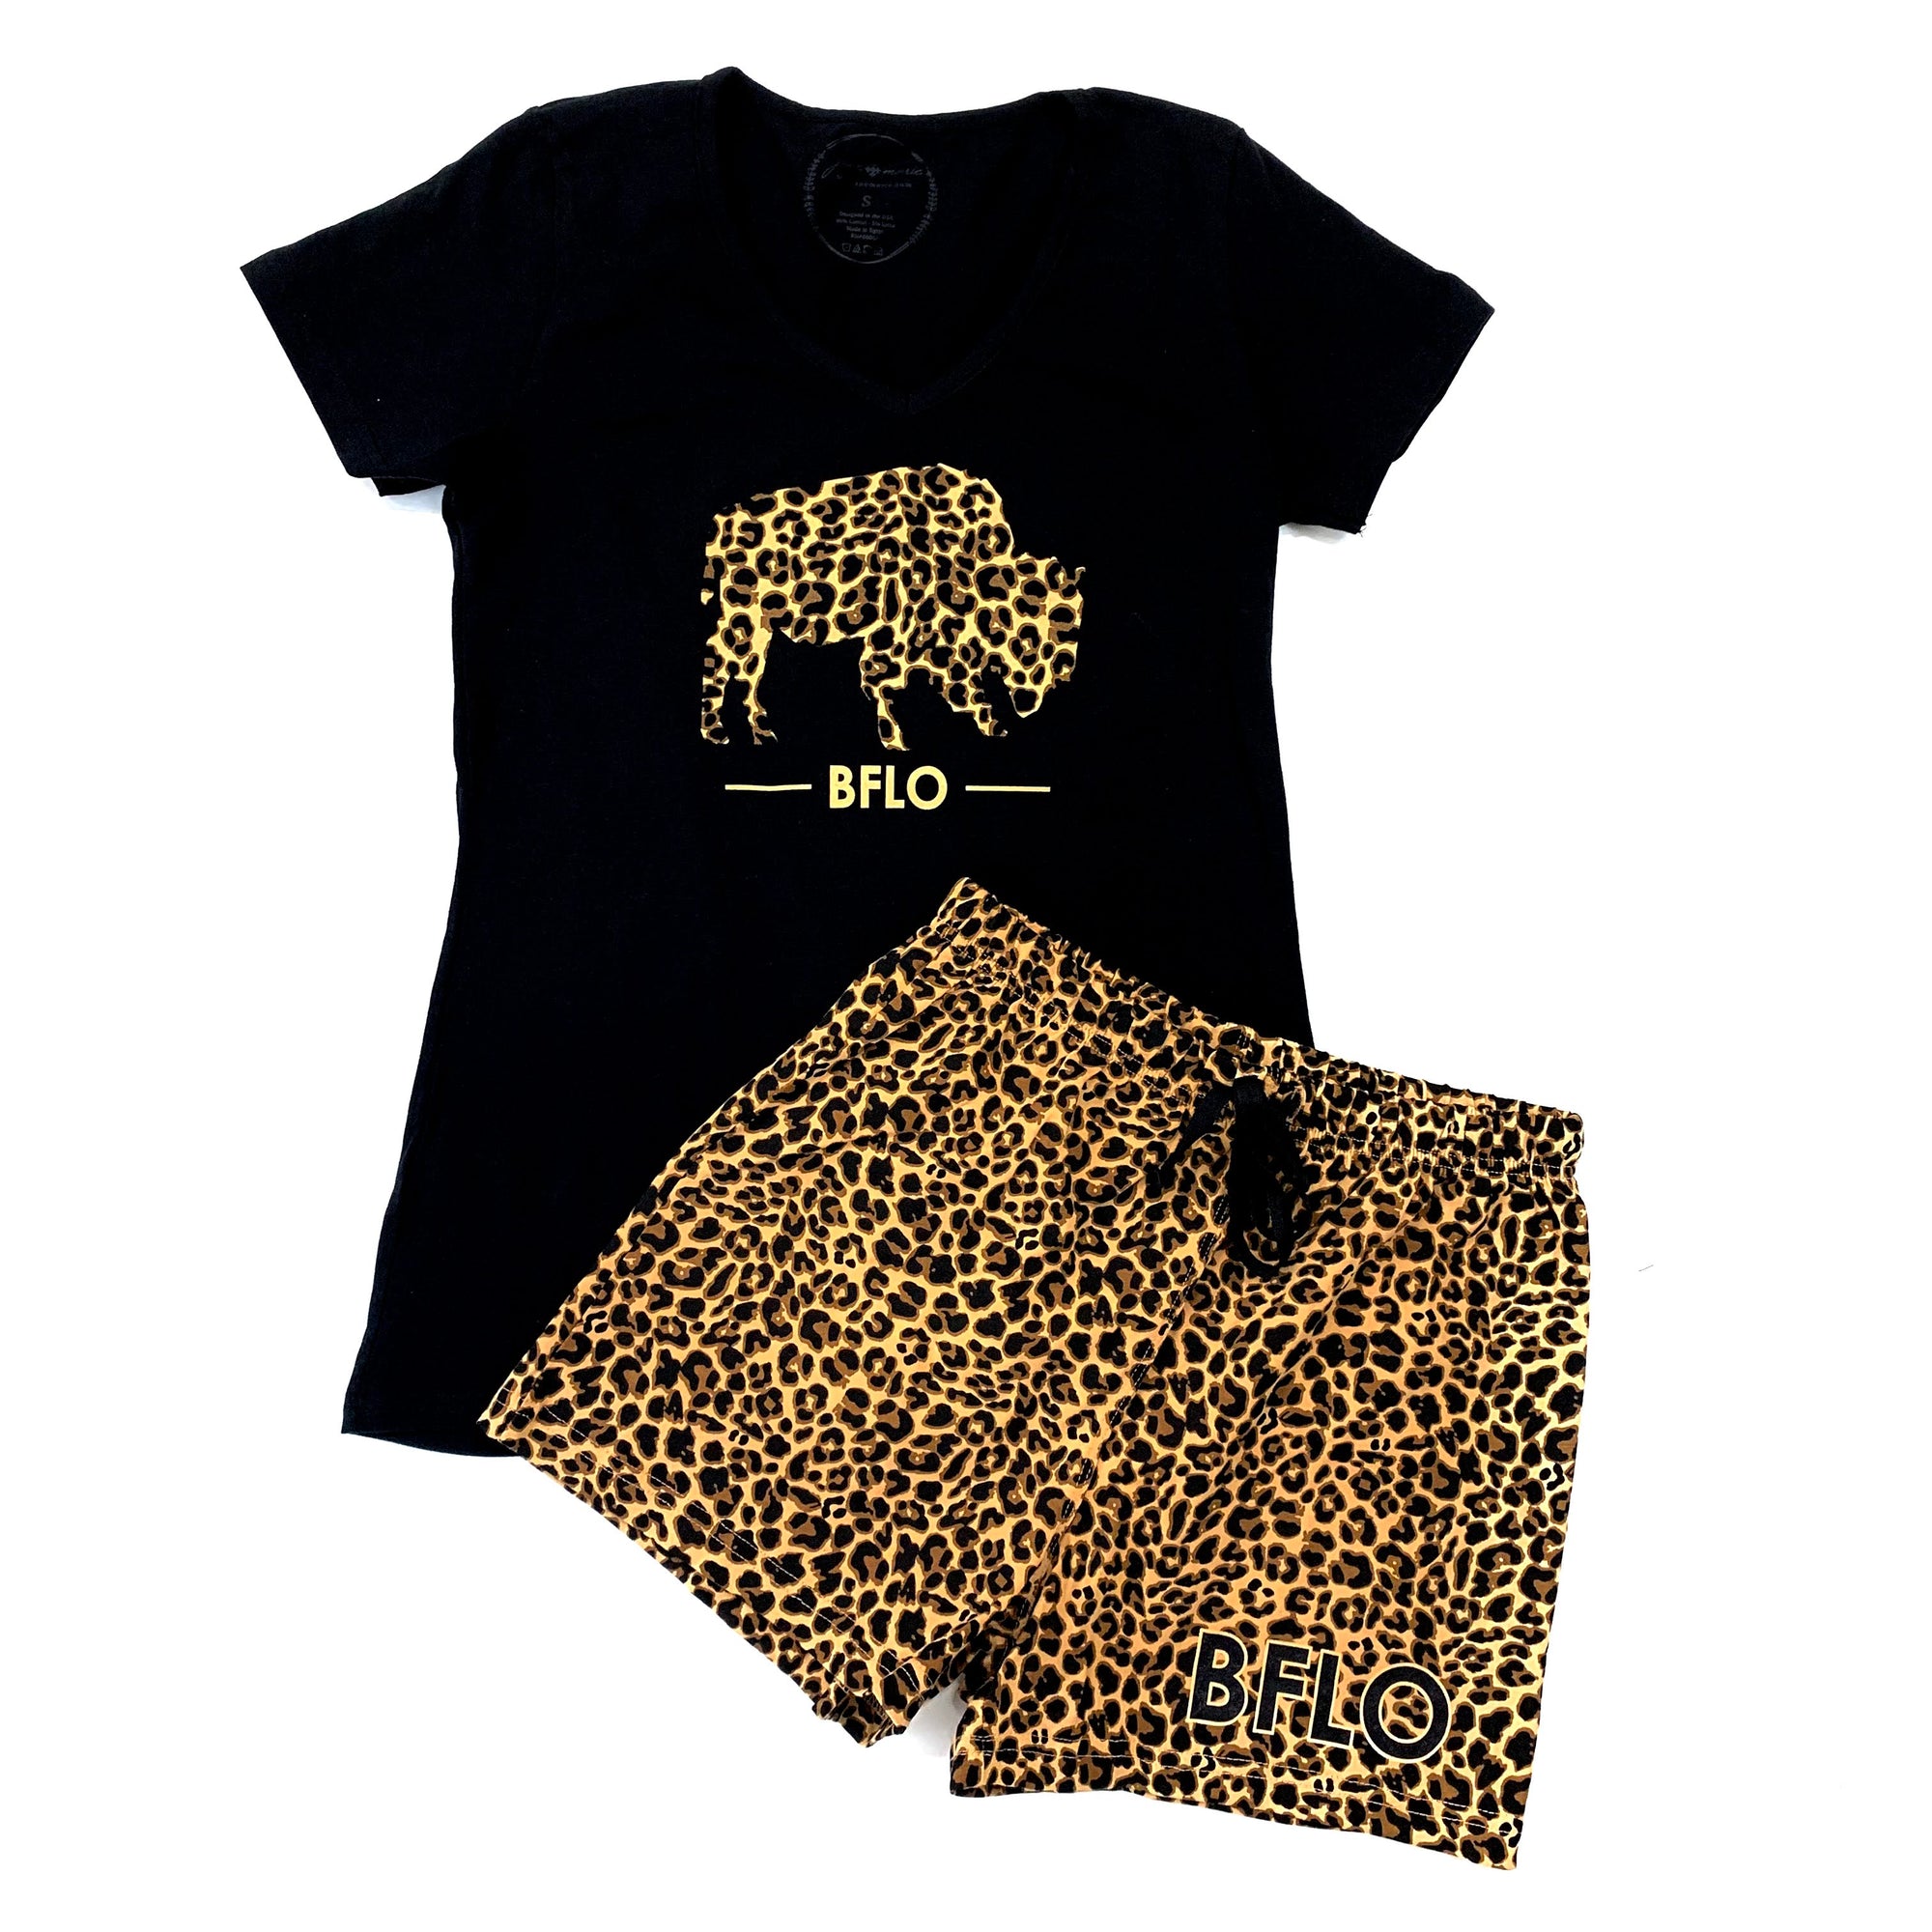 Cheetah Print Shorts